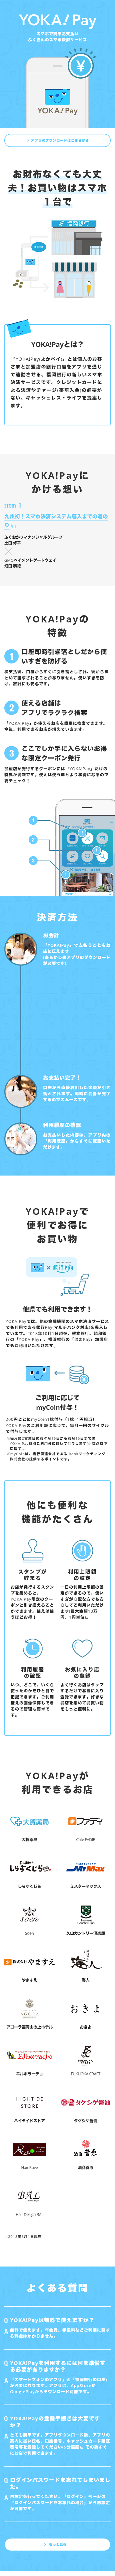 YOKA!Pay_sp_1